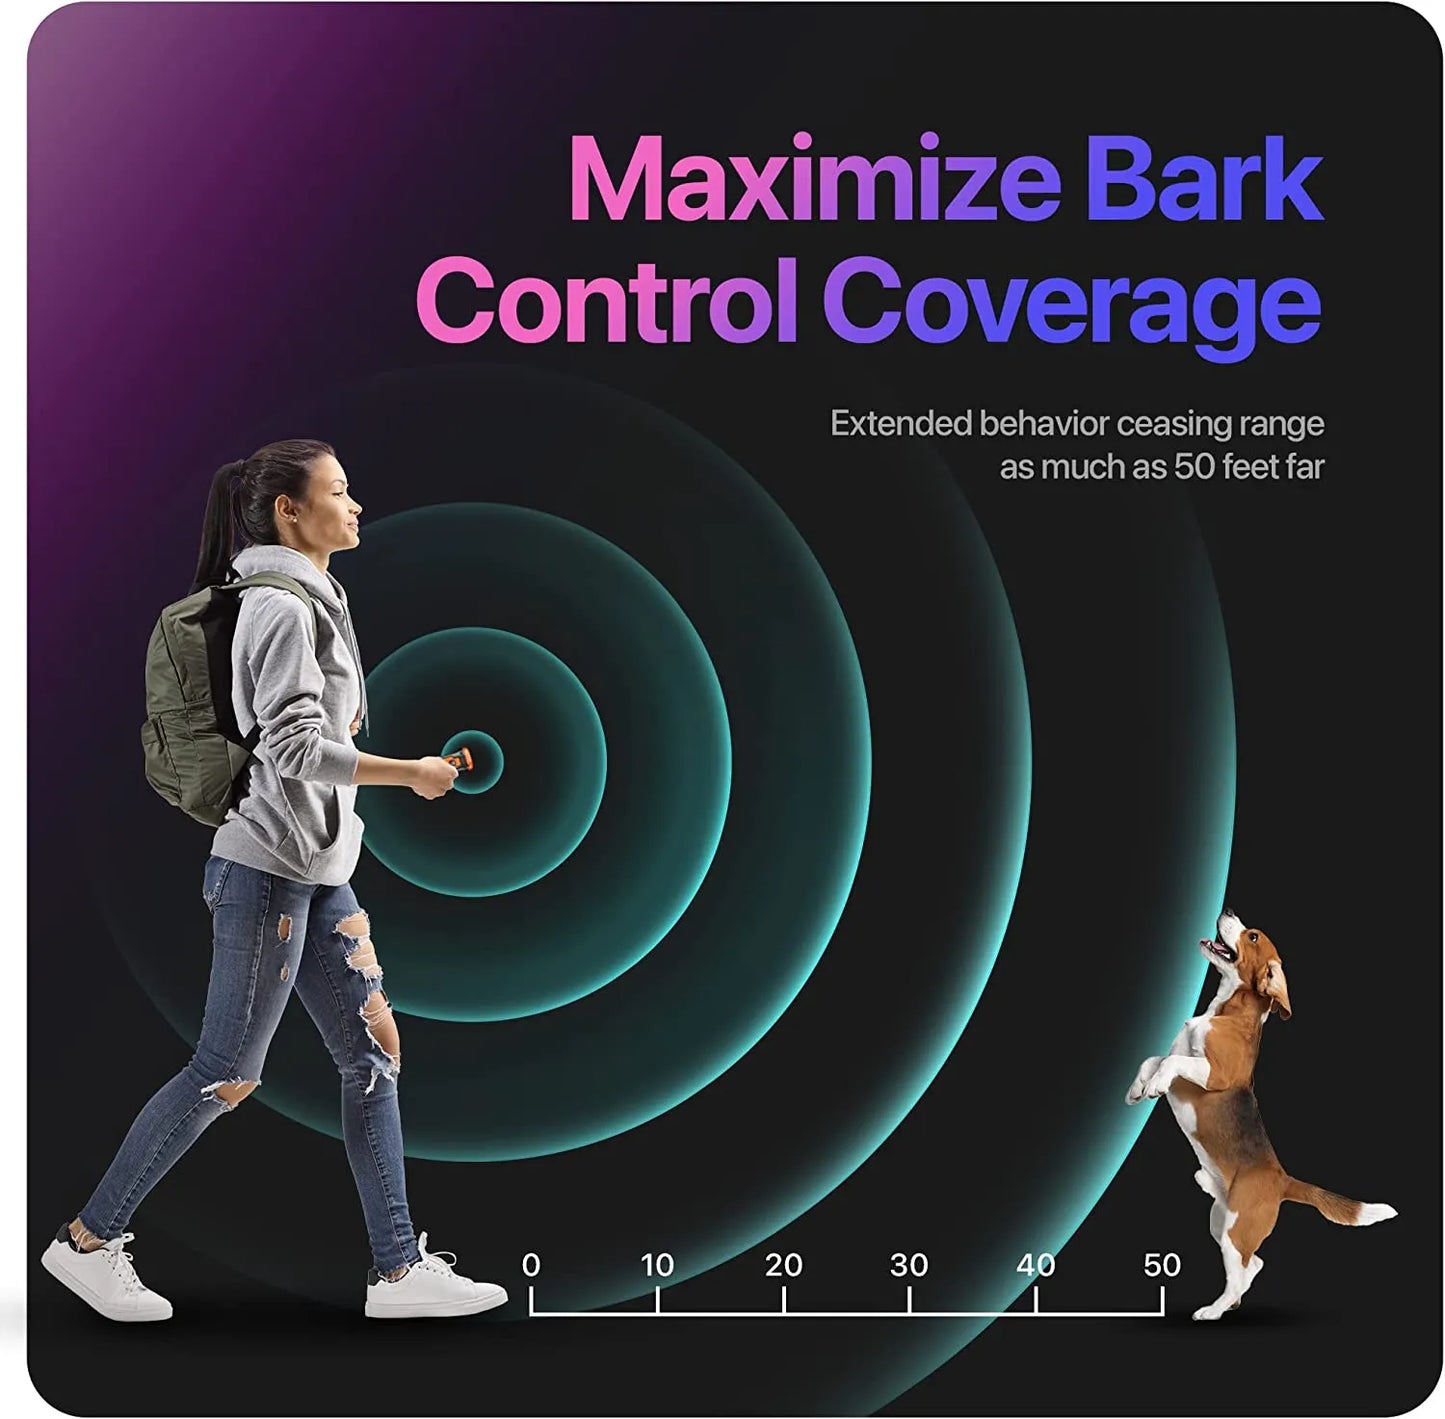 Pet Dog Repeller Ultrasonic Dog Training Device Rechargeable Anti Dog Bark Deterrent Device With LED Flashlight